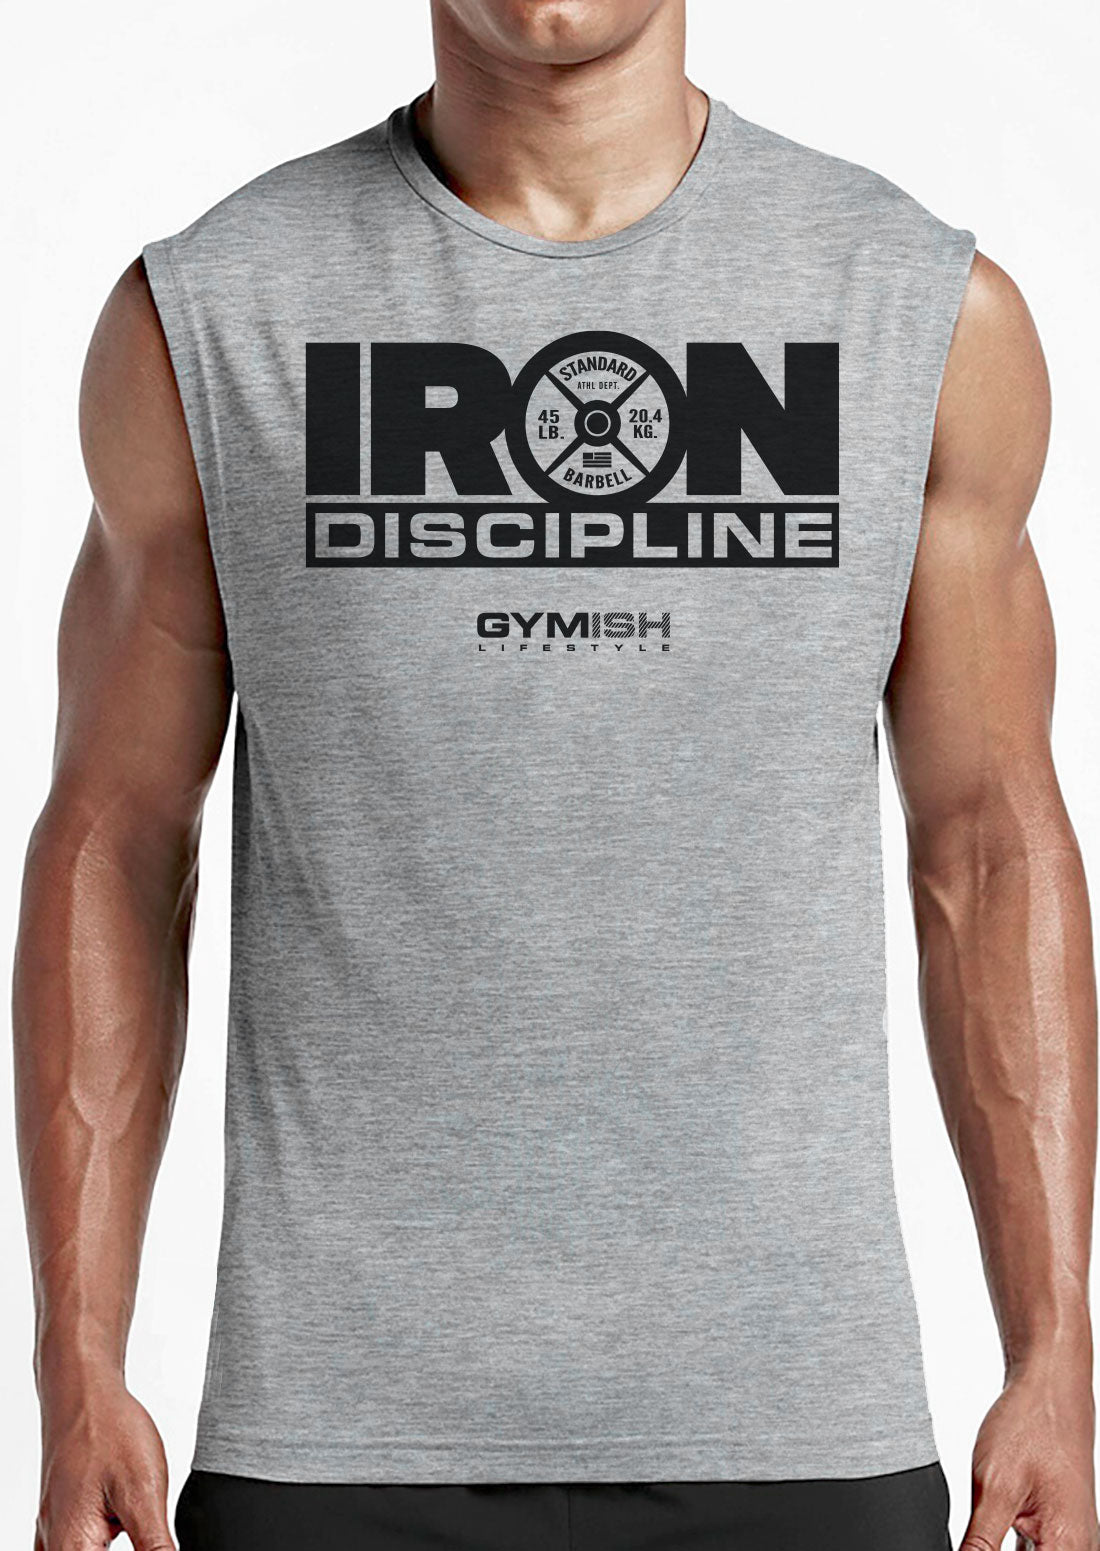 Iron Discipline Muscle Tank Top, Sleeveless Workout Shirt, Lifting Shirt, Gym Shirt